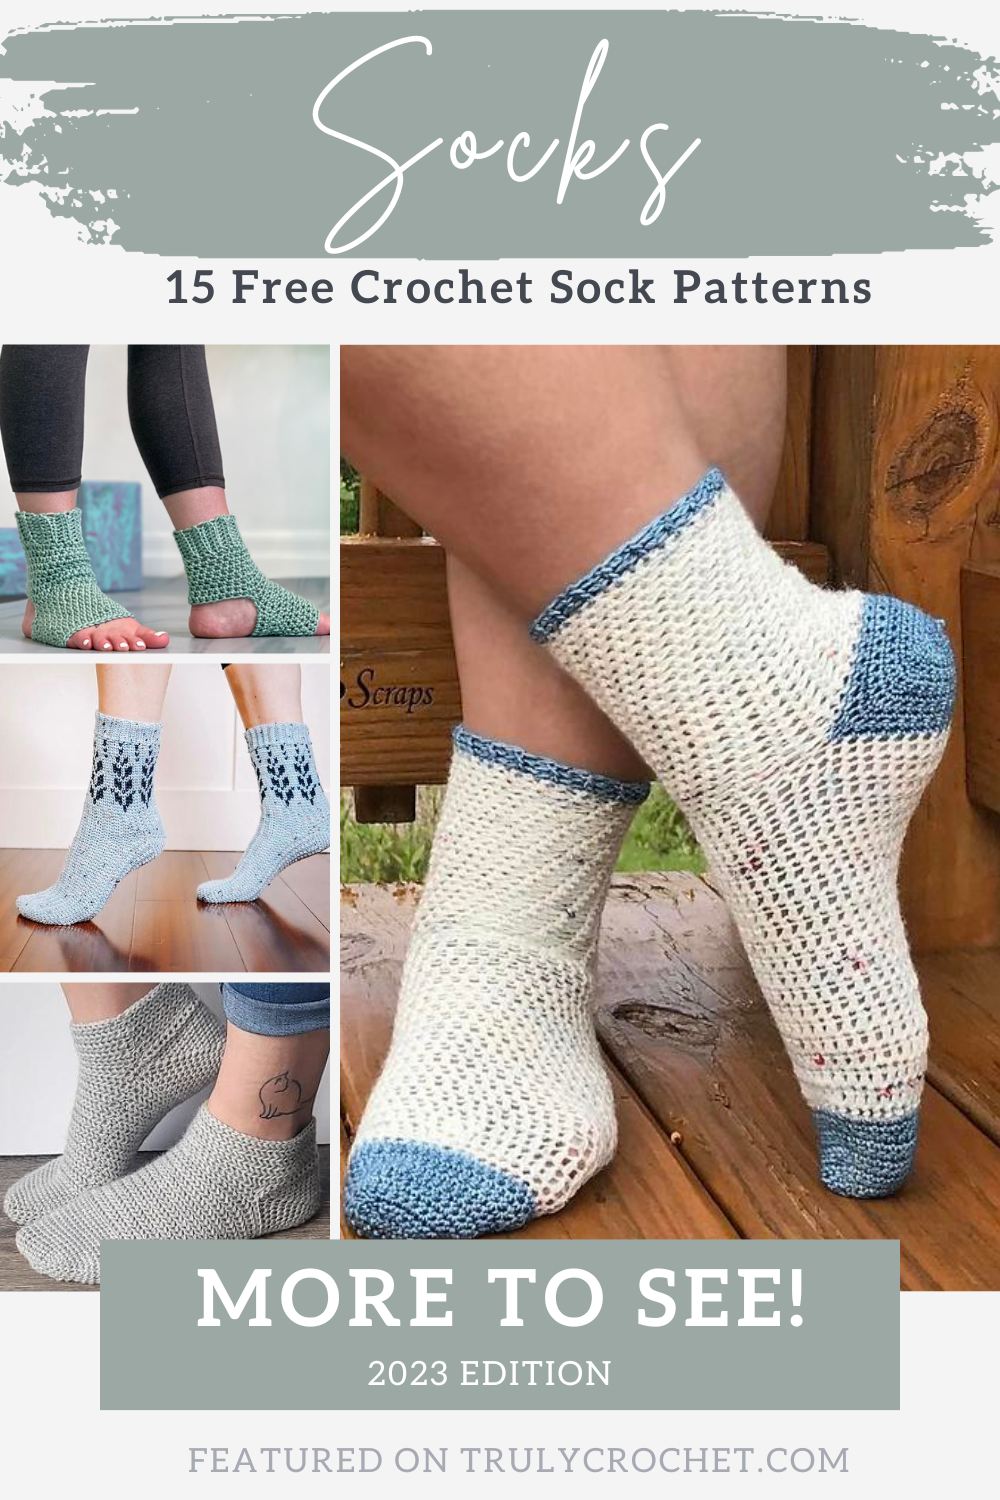 15 free crochet patterns - 2023 edition